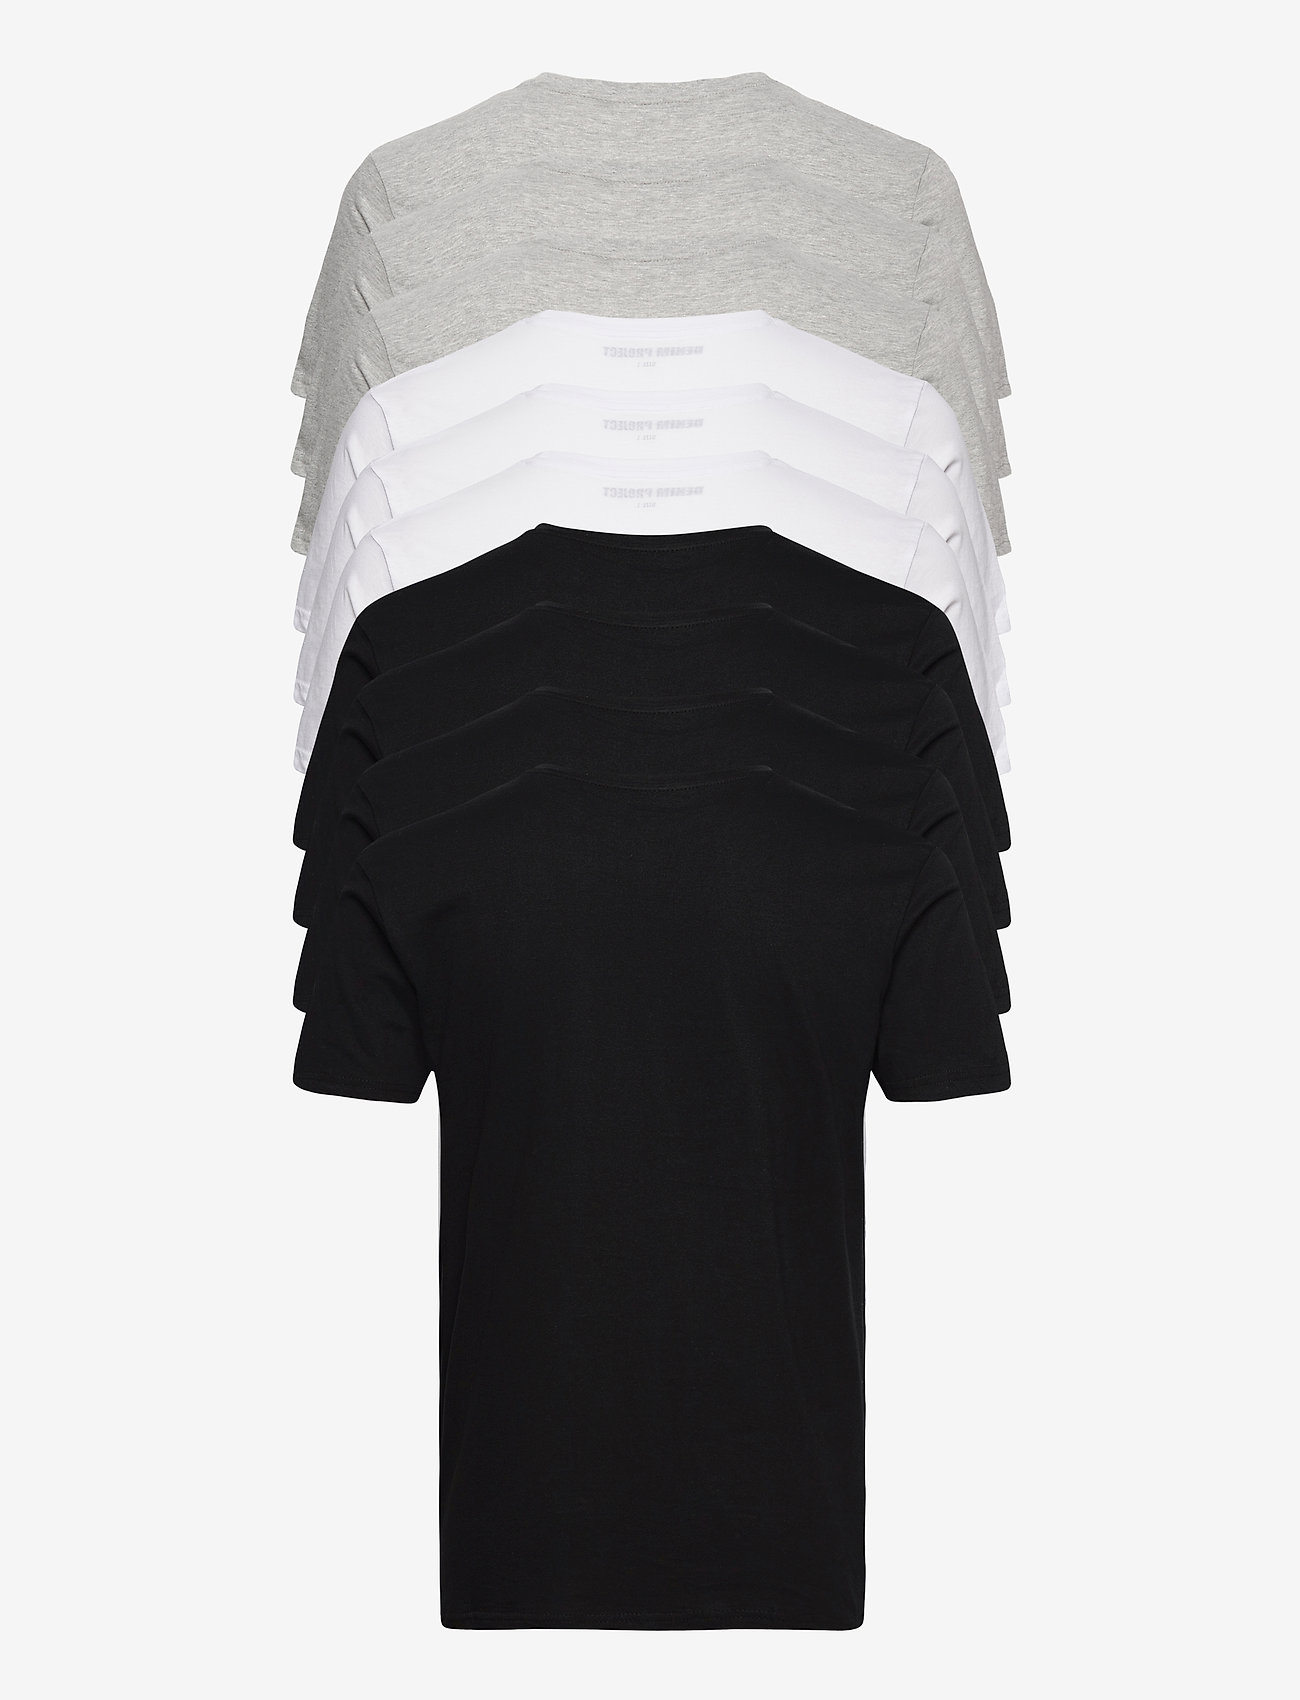 Denim project - 10 Pack T-SHIRT - basic t-shirts - 4xblack/ 3x white/ 3x light grey melange - 0